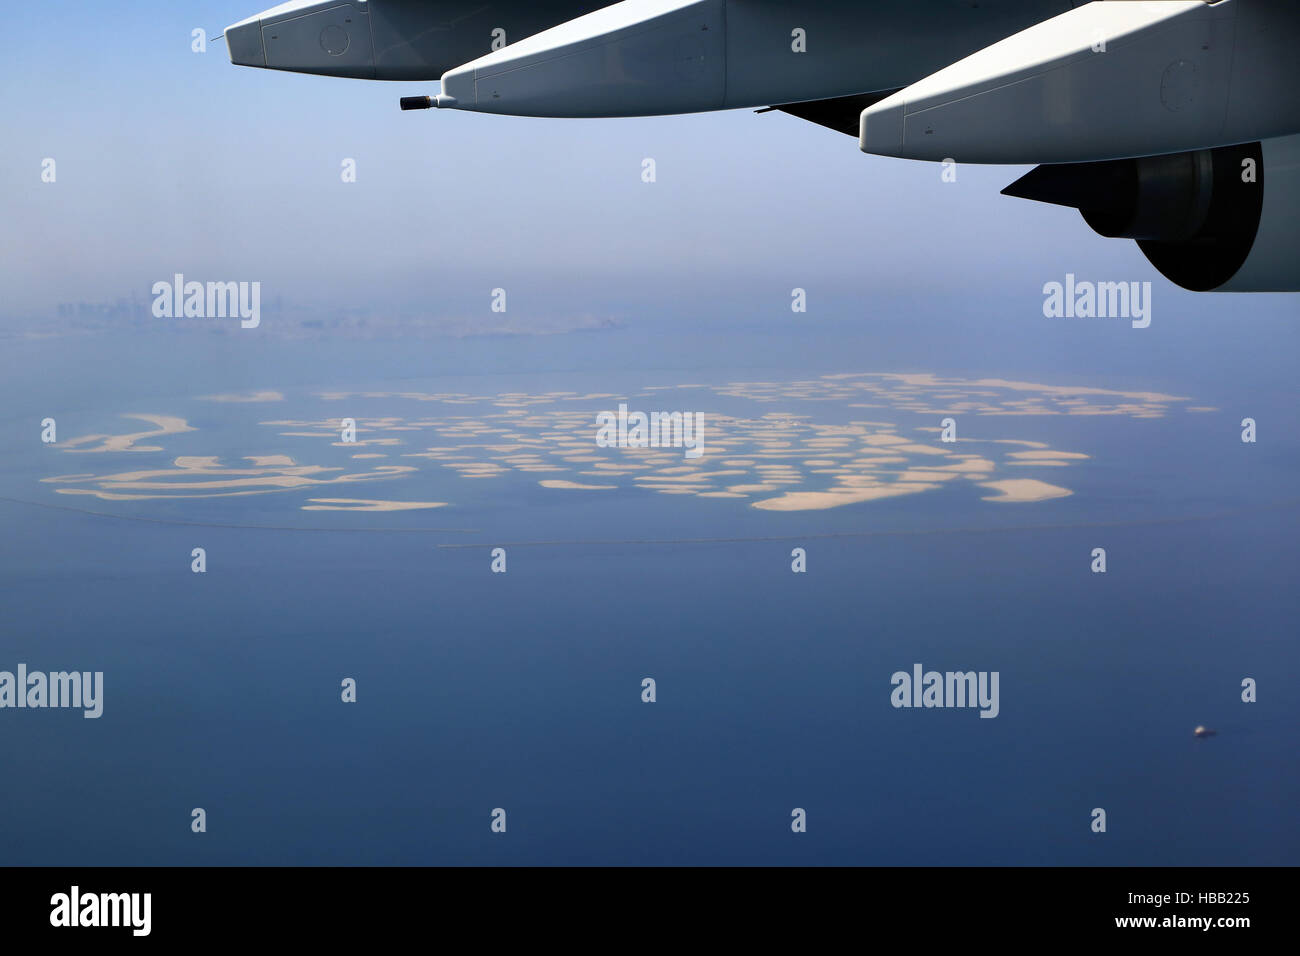 Dubai, artificial island in the Persian Gulf Stock Photo